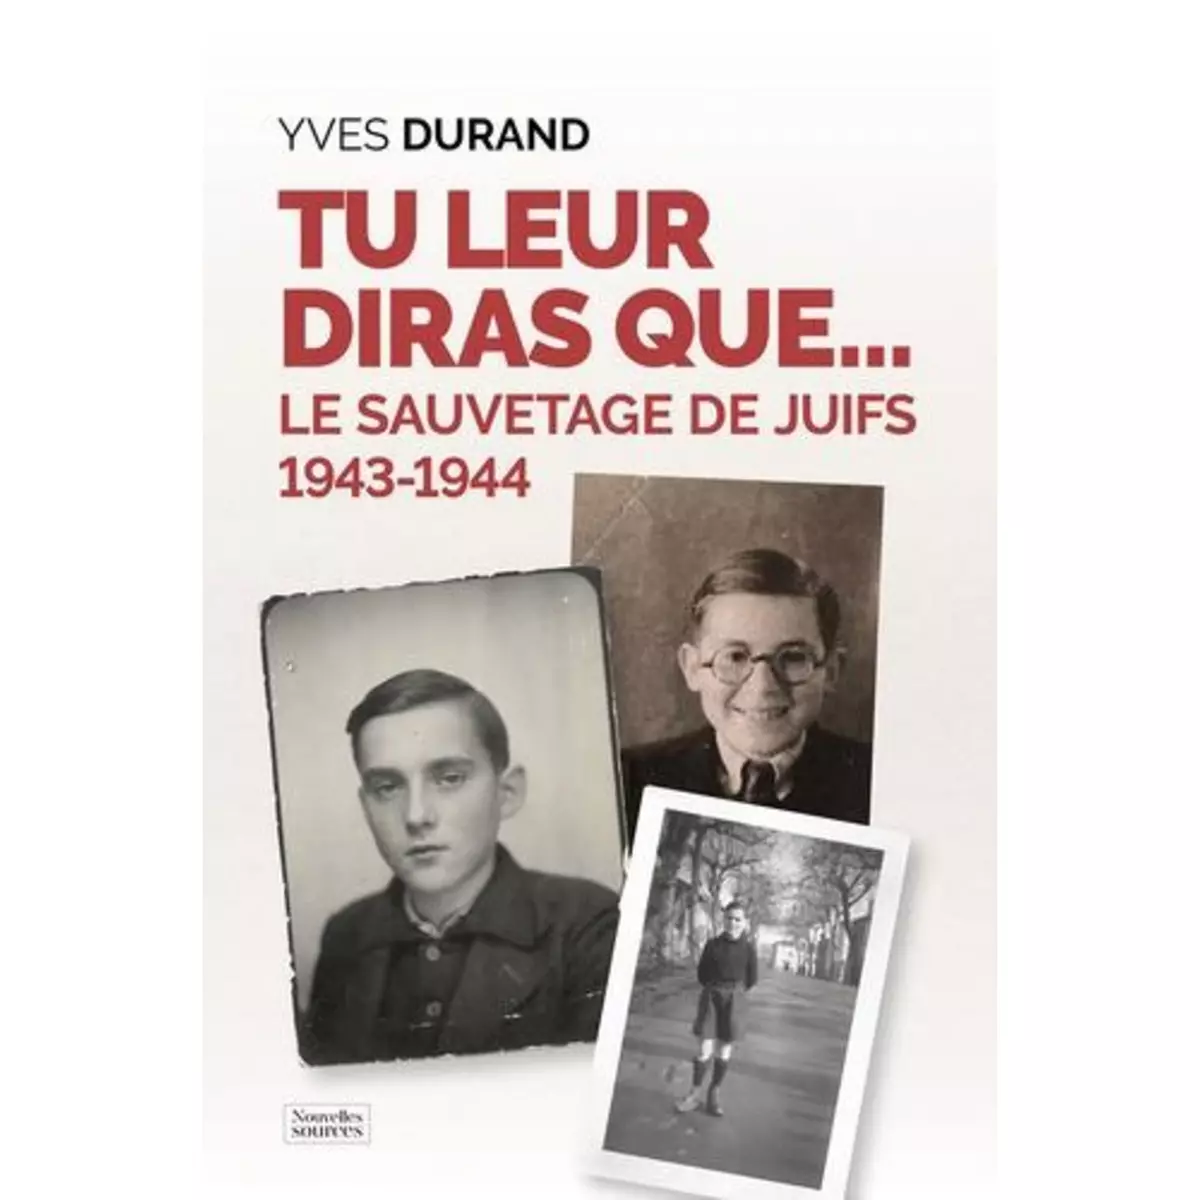  TU LEUR DIRAS QUE.... LE SAUVETAGE DES JUIFS 1943-1944, Durand Yves